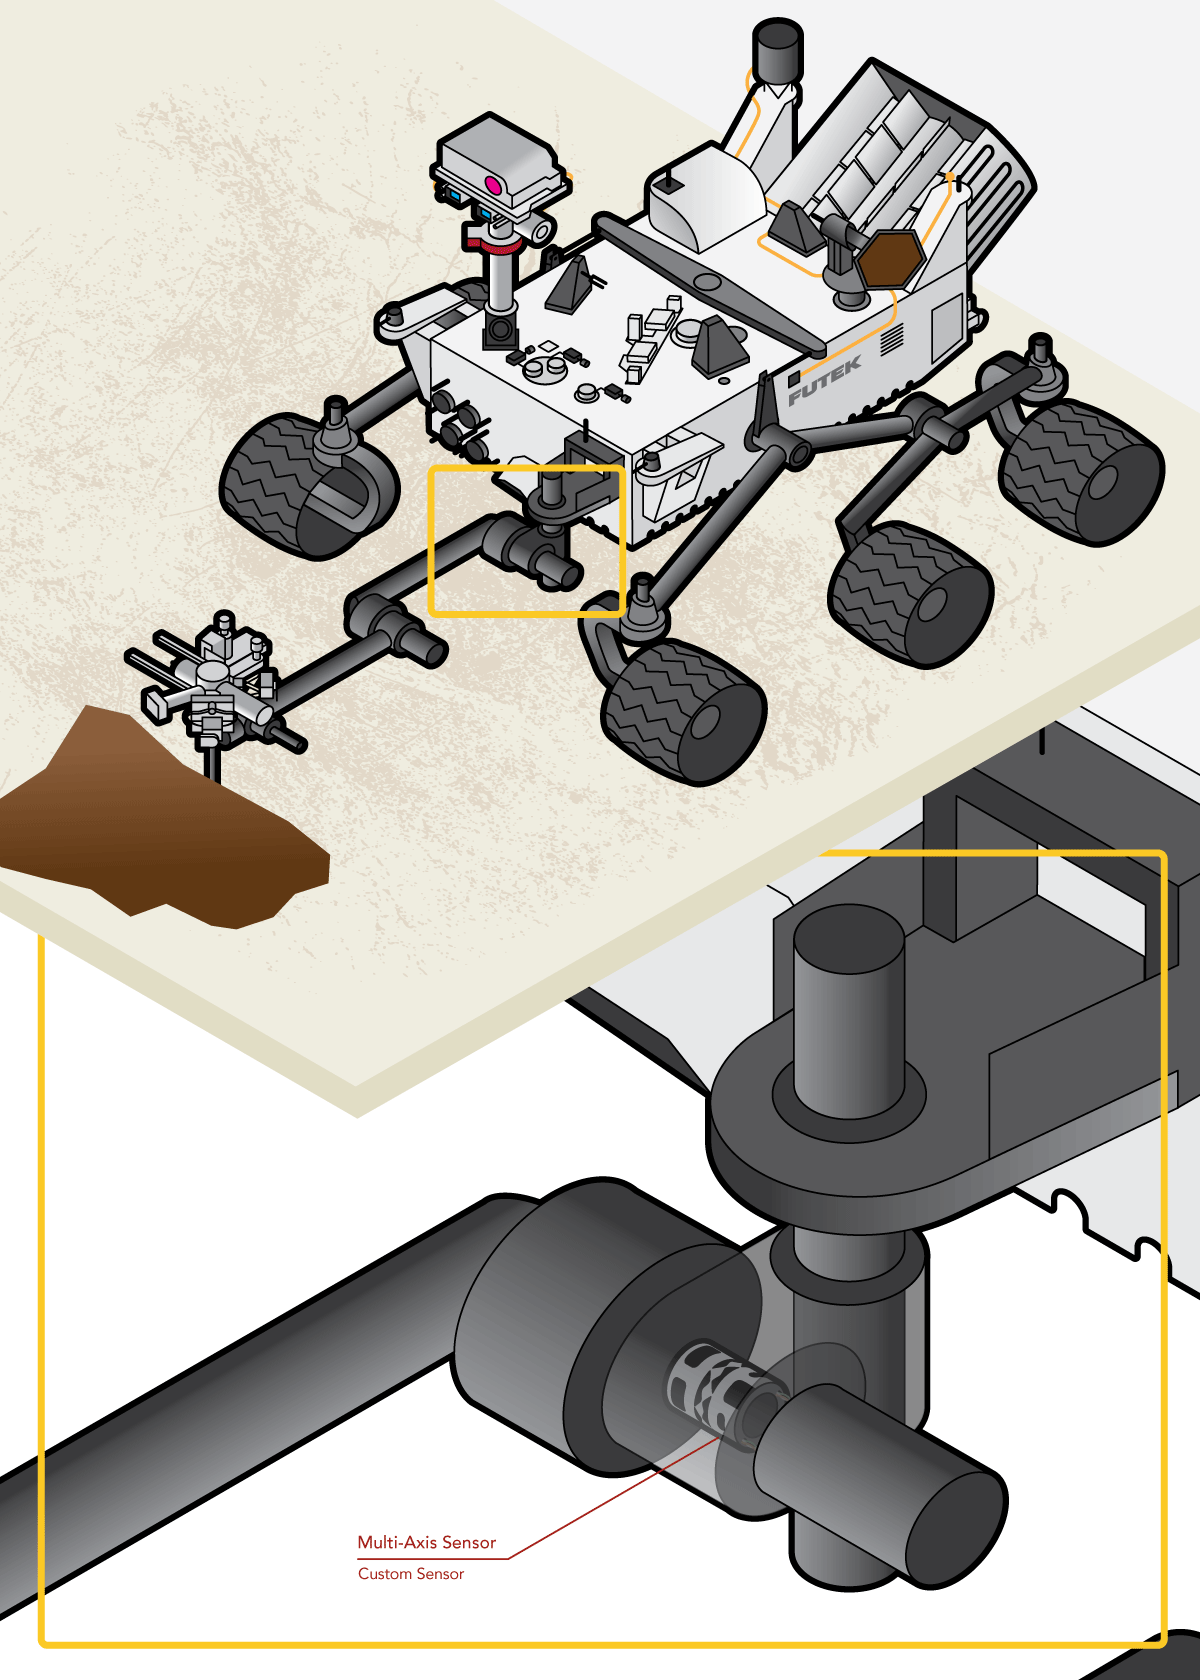 Multi-Axis Sensor - MSL Mars Rover Cryogenic Multi-Axis